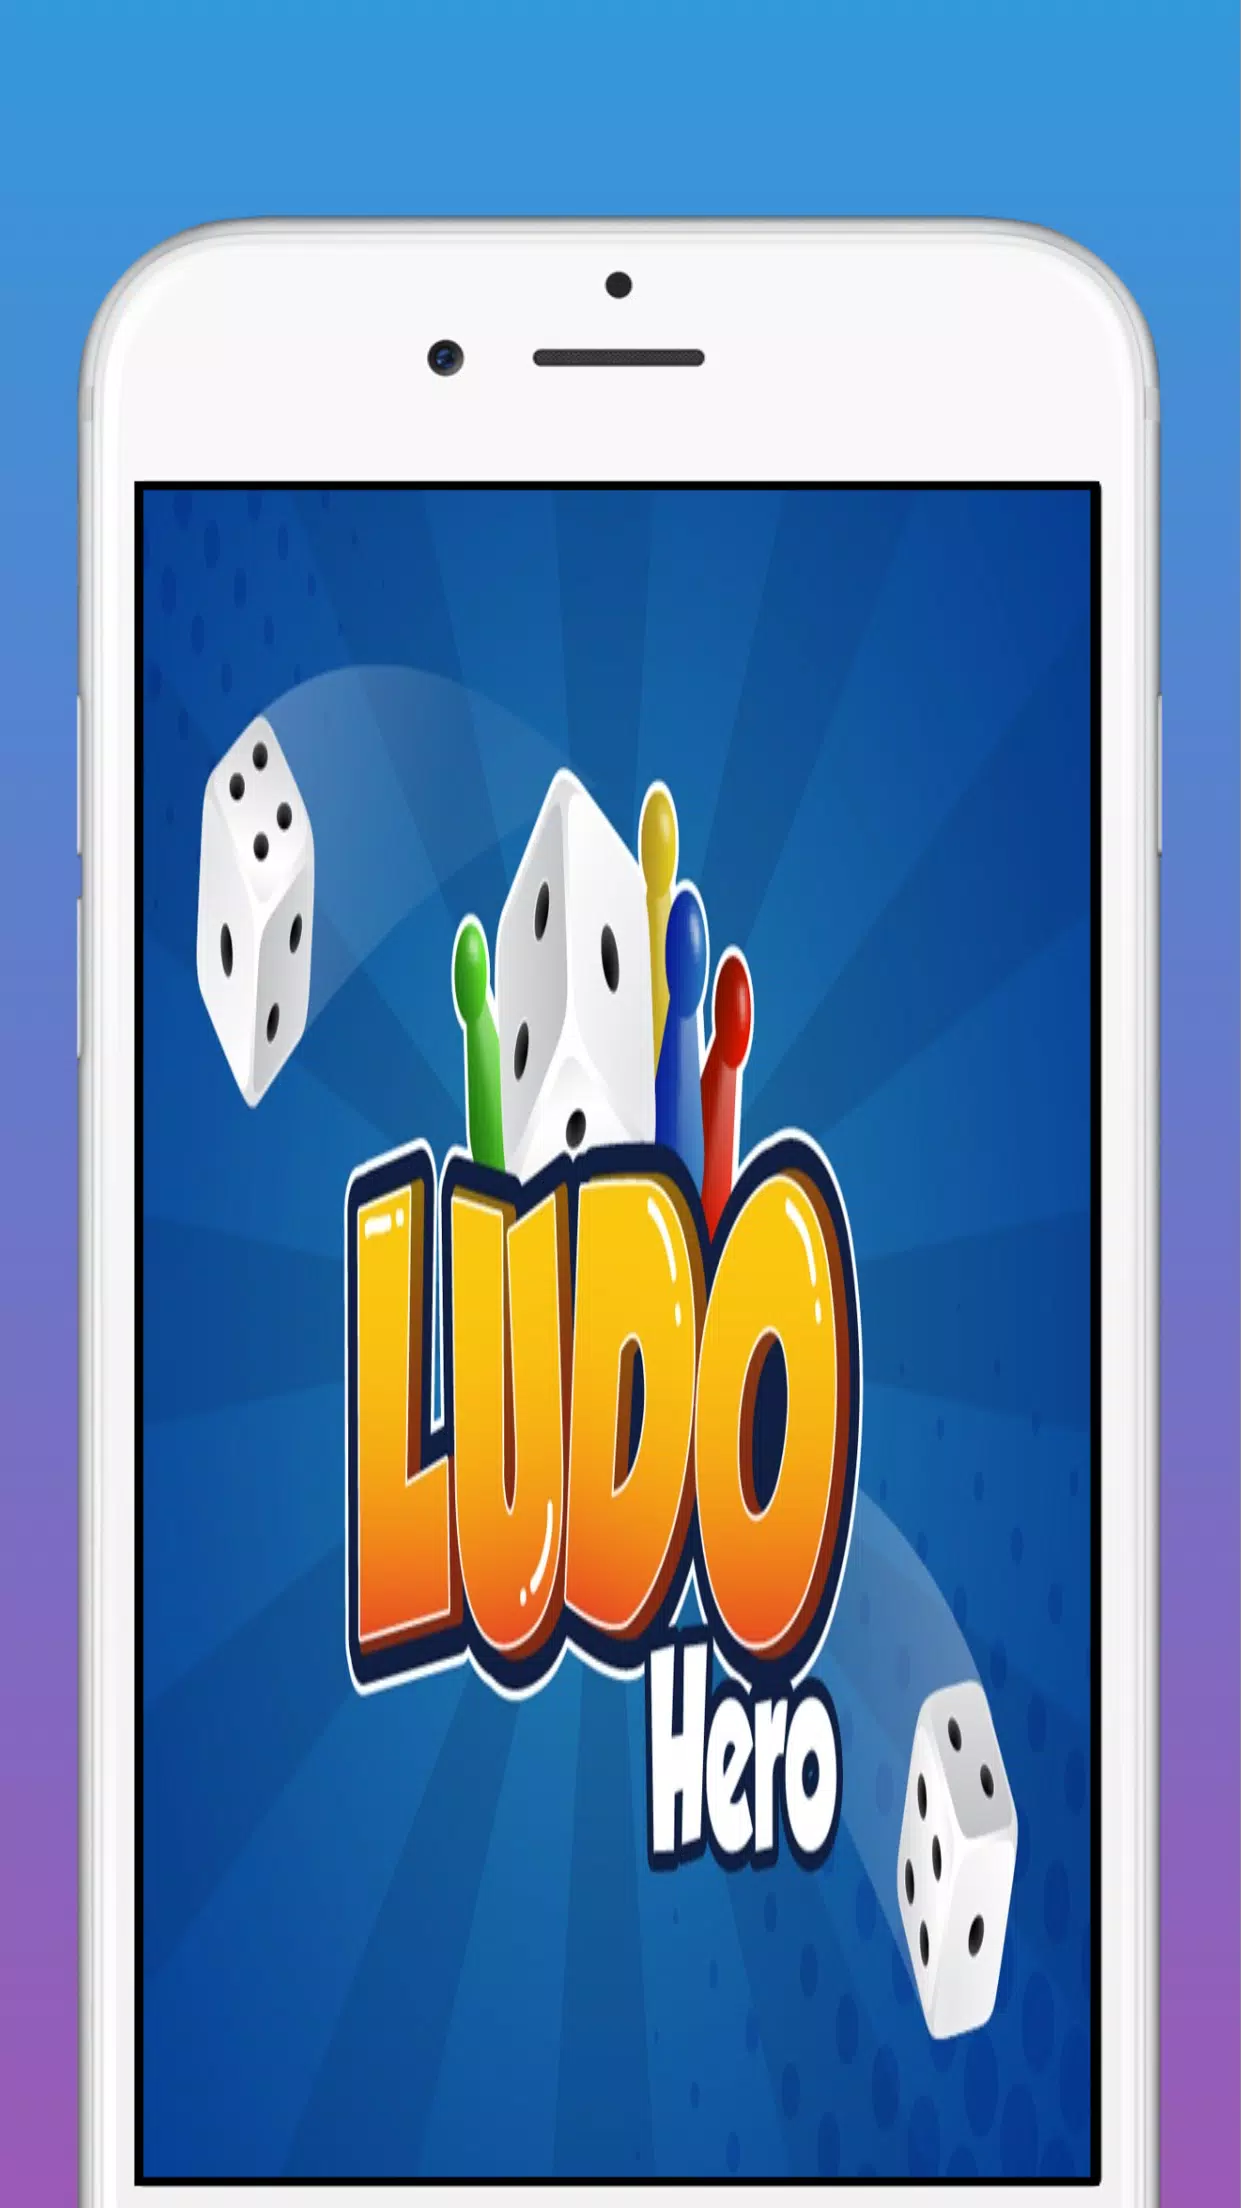 Ludo Club - Fun Dice Game for iPhone - Download